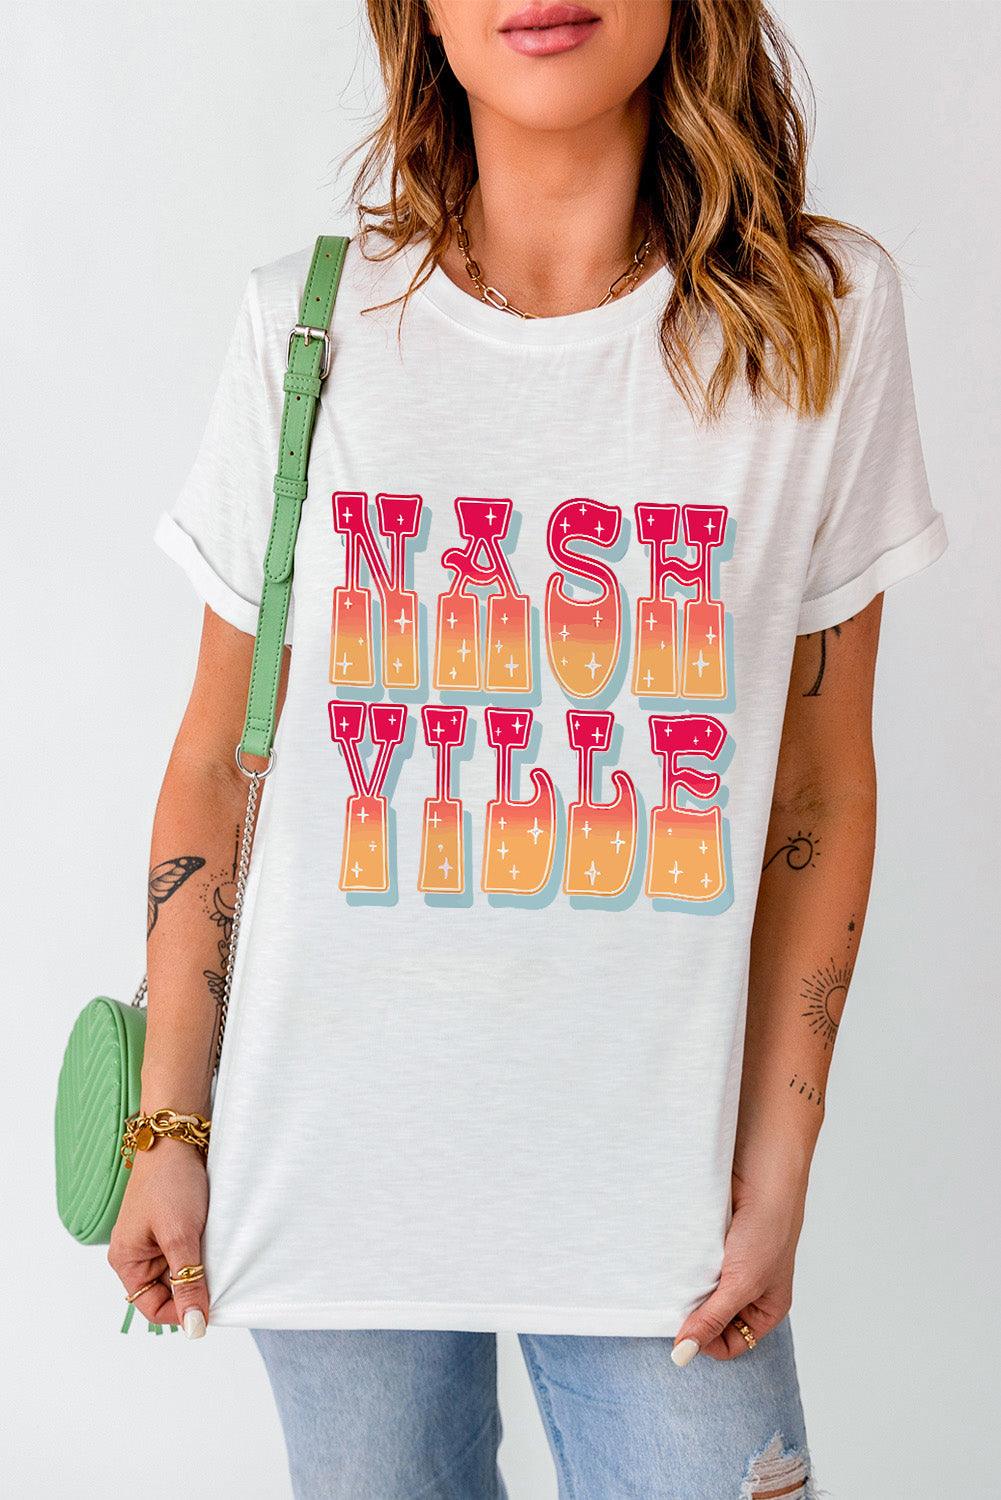 White NASHVILLE Starry Print Crew Neck Oversized T Shirt - L & M Kee, LLC